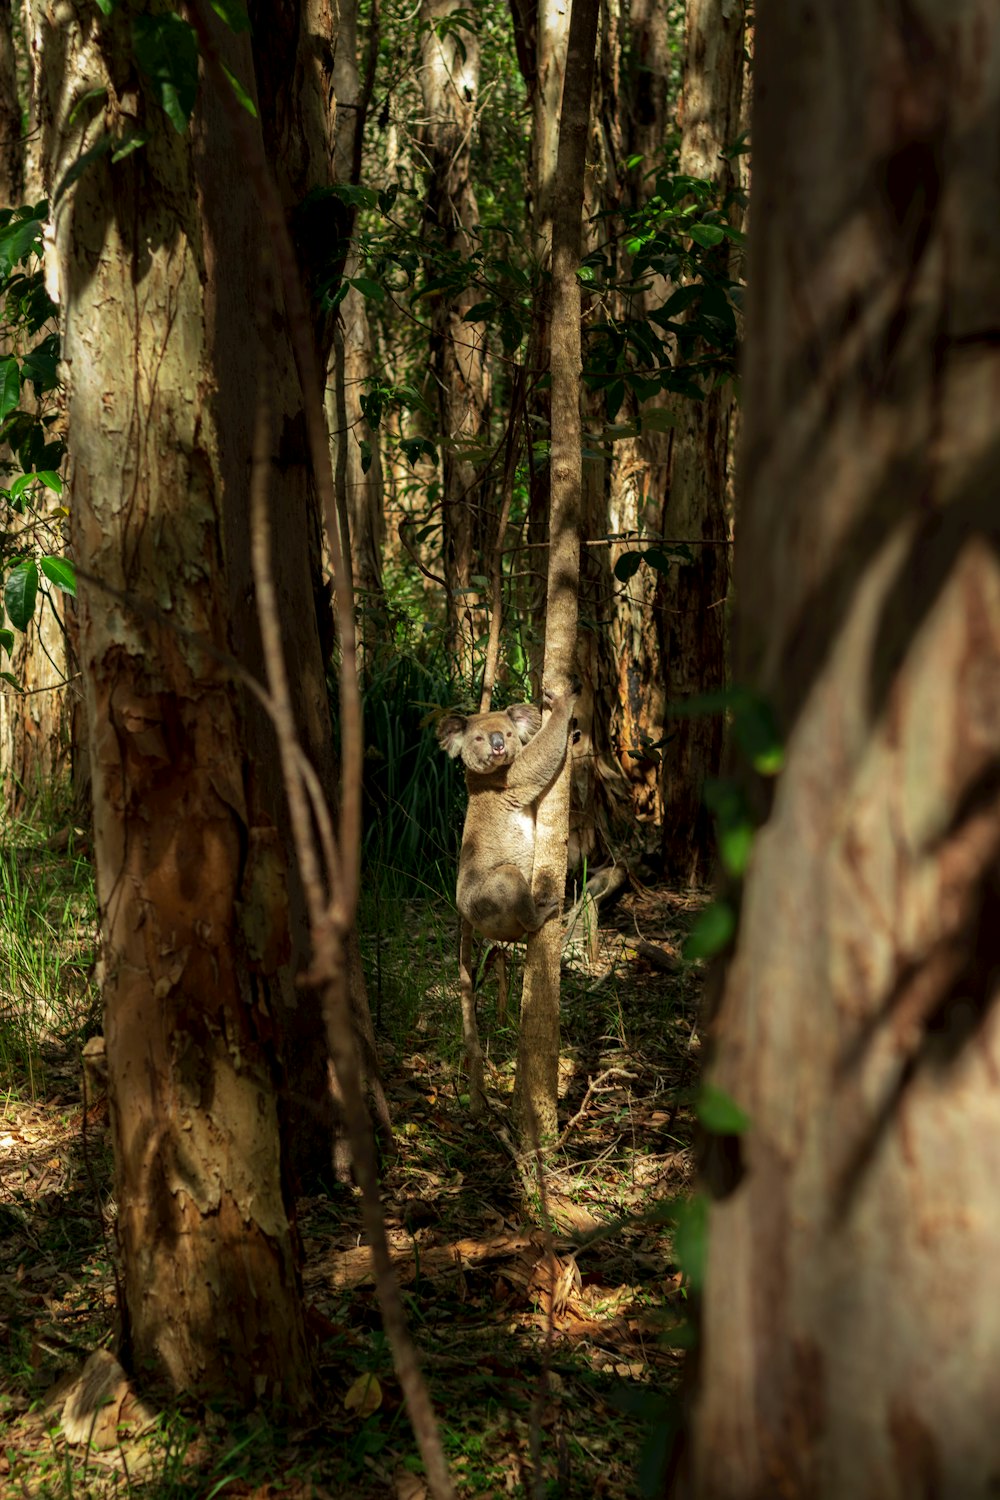 a deer running through a forest of trees